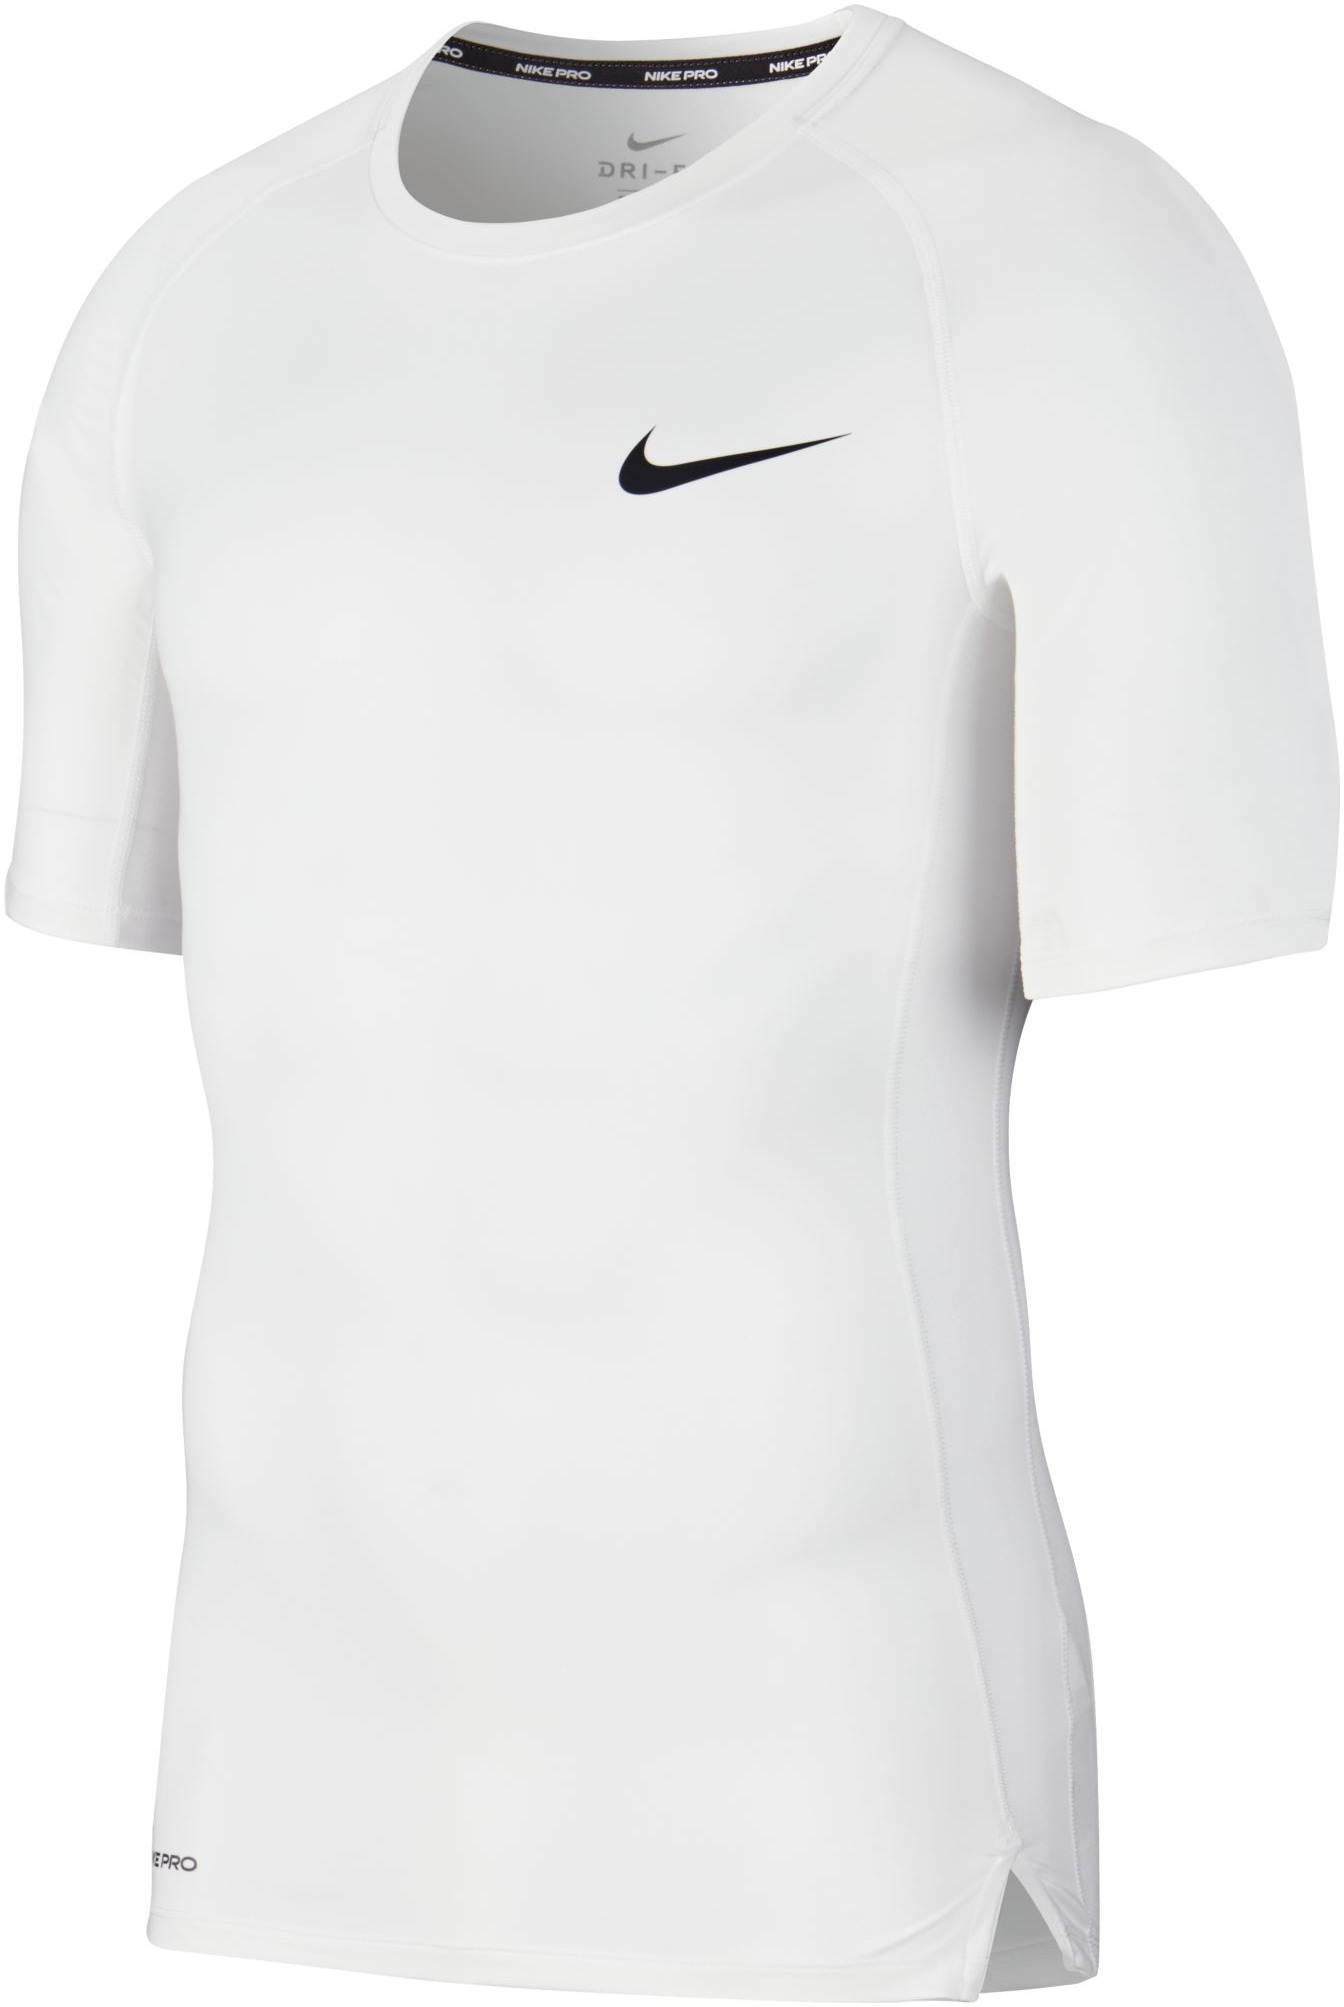 hvor ofte transfusion fire gange Mens compression short sleeve shirt Nike PRO white | AD Sport.store